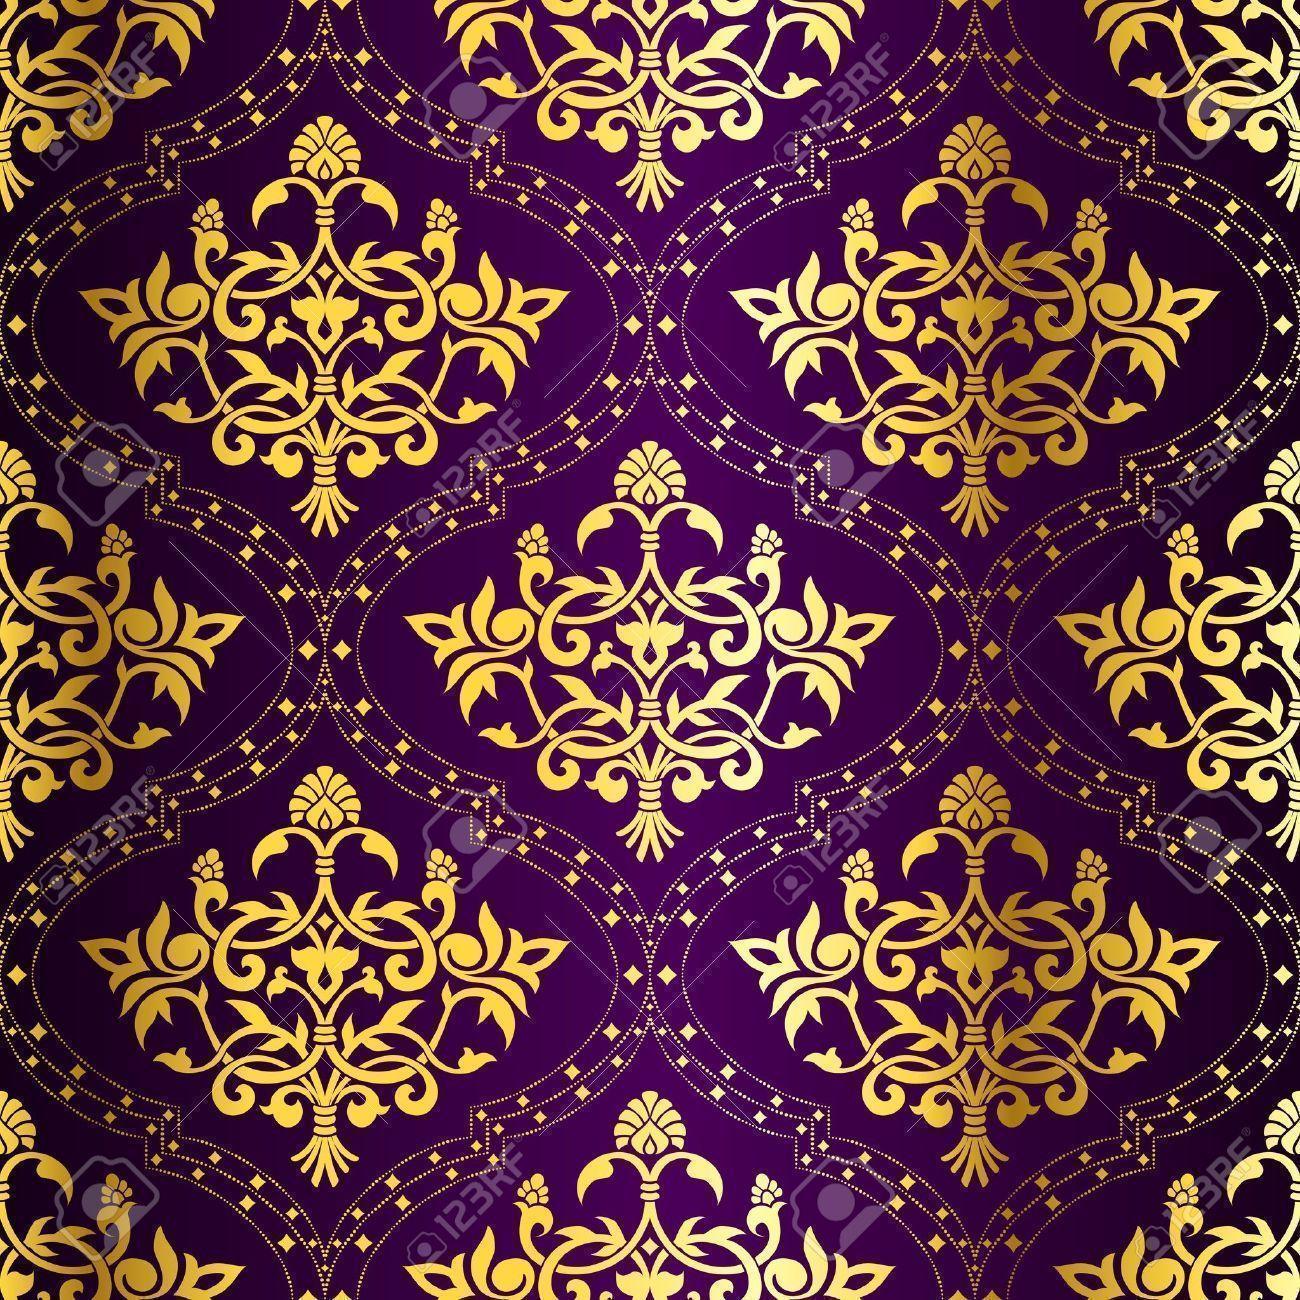 Purple Gold Background Images  Free Download on Freepik